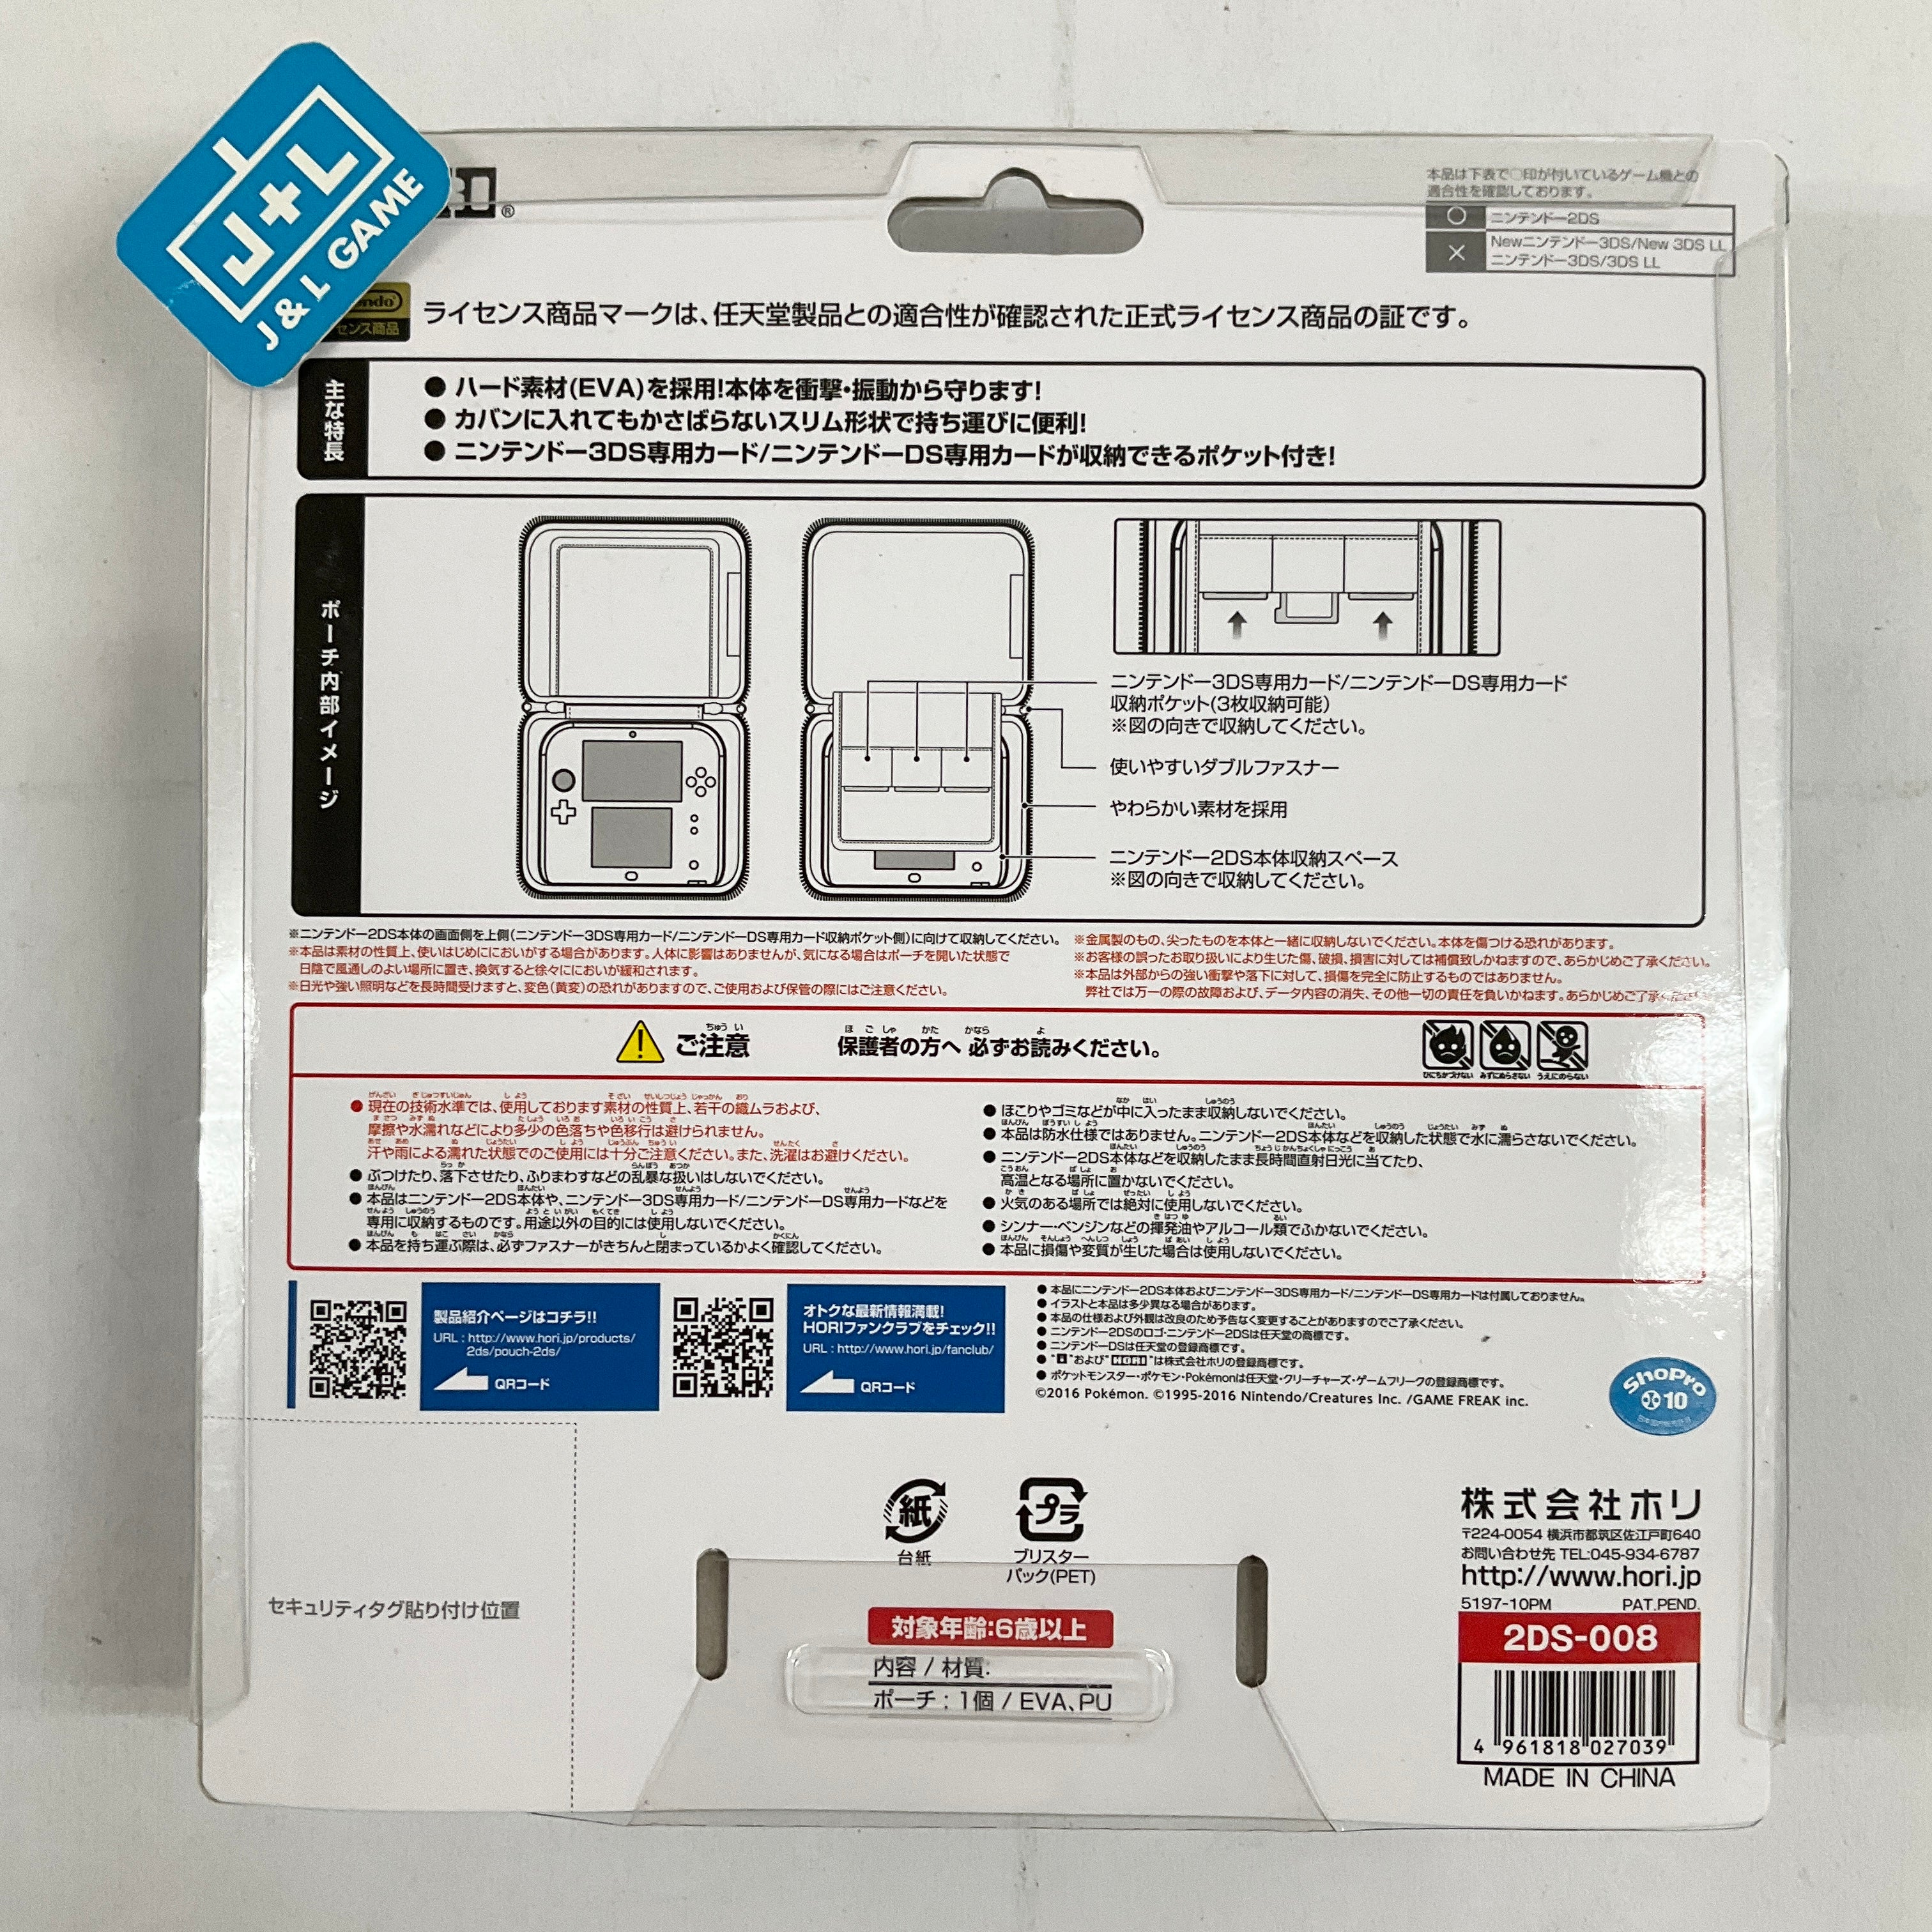 HORI Nintendo 2DS Hard Pouch (Pokemon Sun/Moon) - Nintendo 3DS (Japanese Import) Accessories HORI   